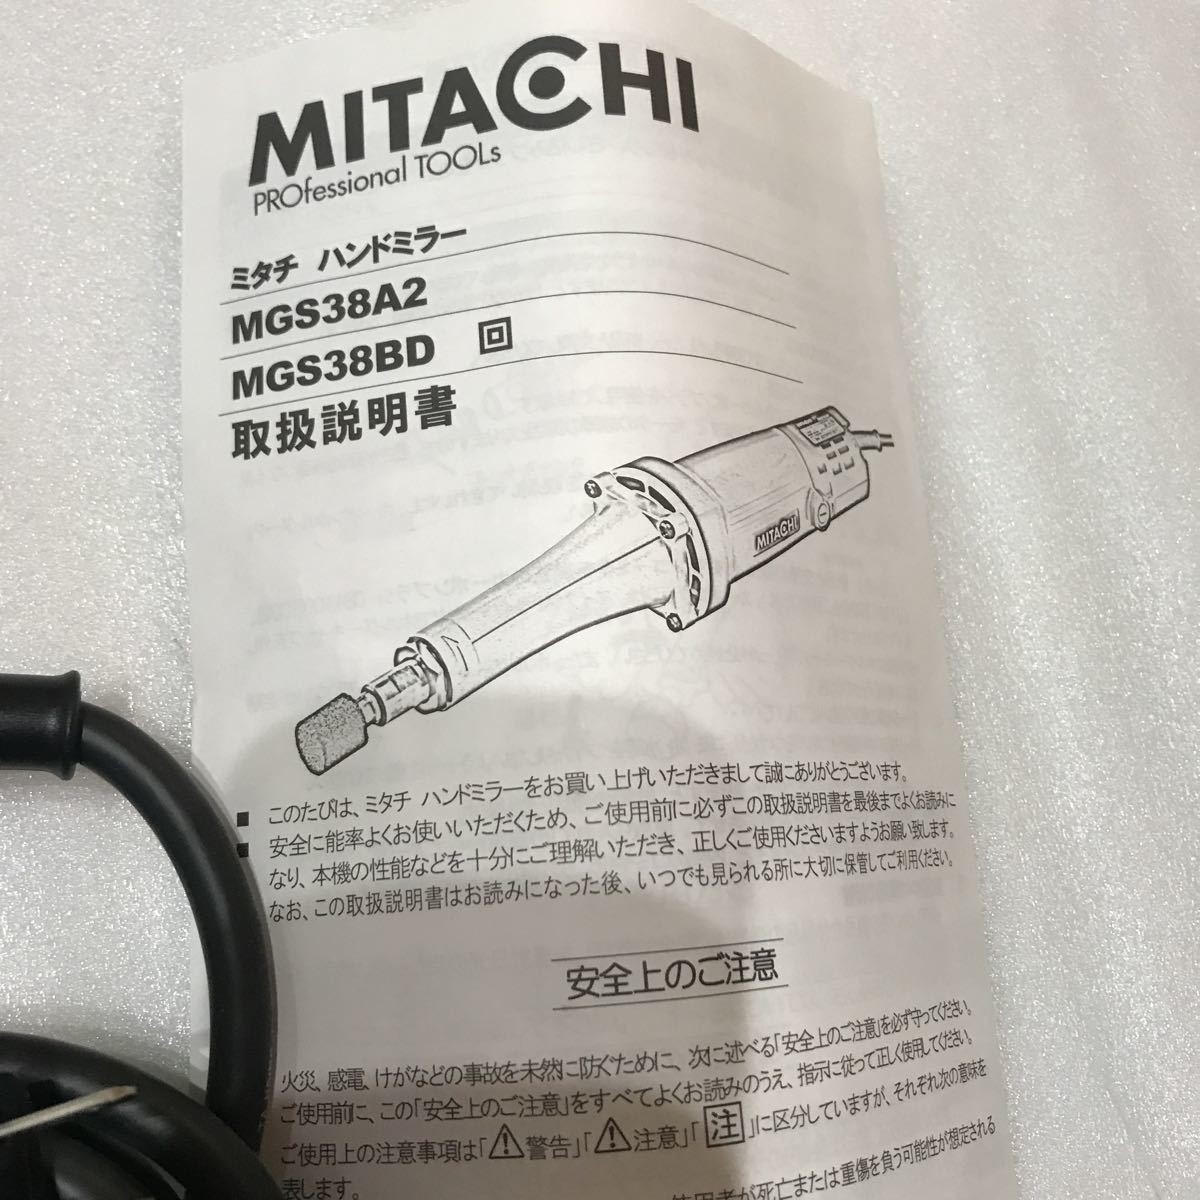 MITACHI ハンドミラー MGS38BD - 通販 - guianegro.com.br